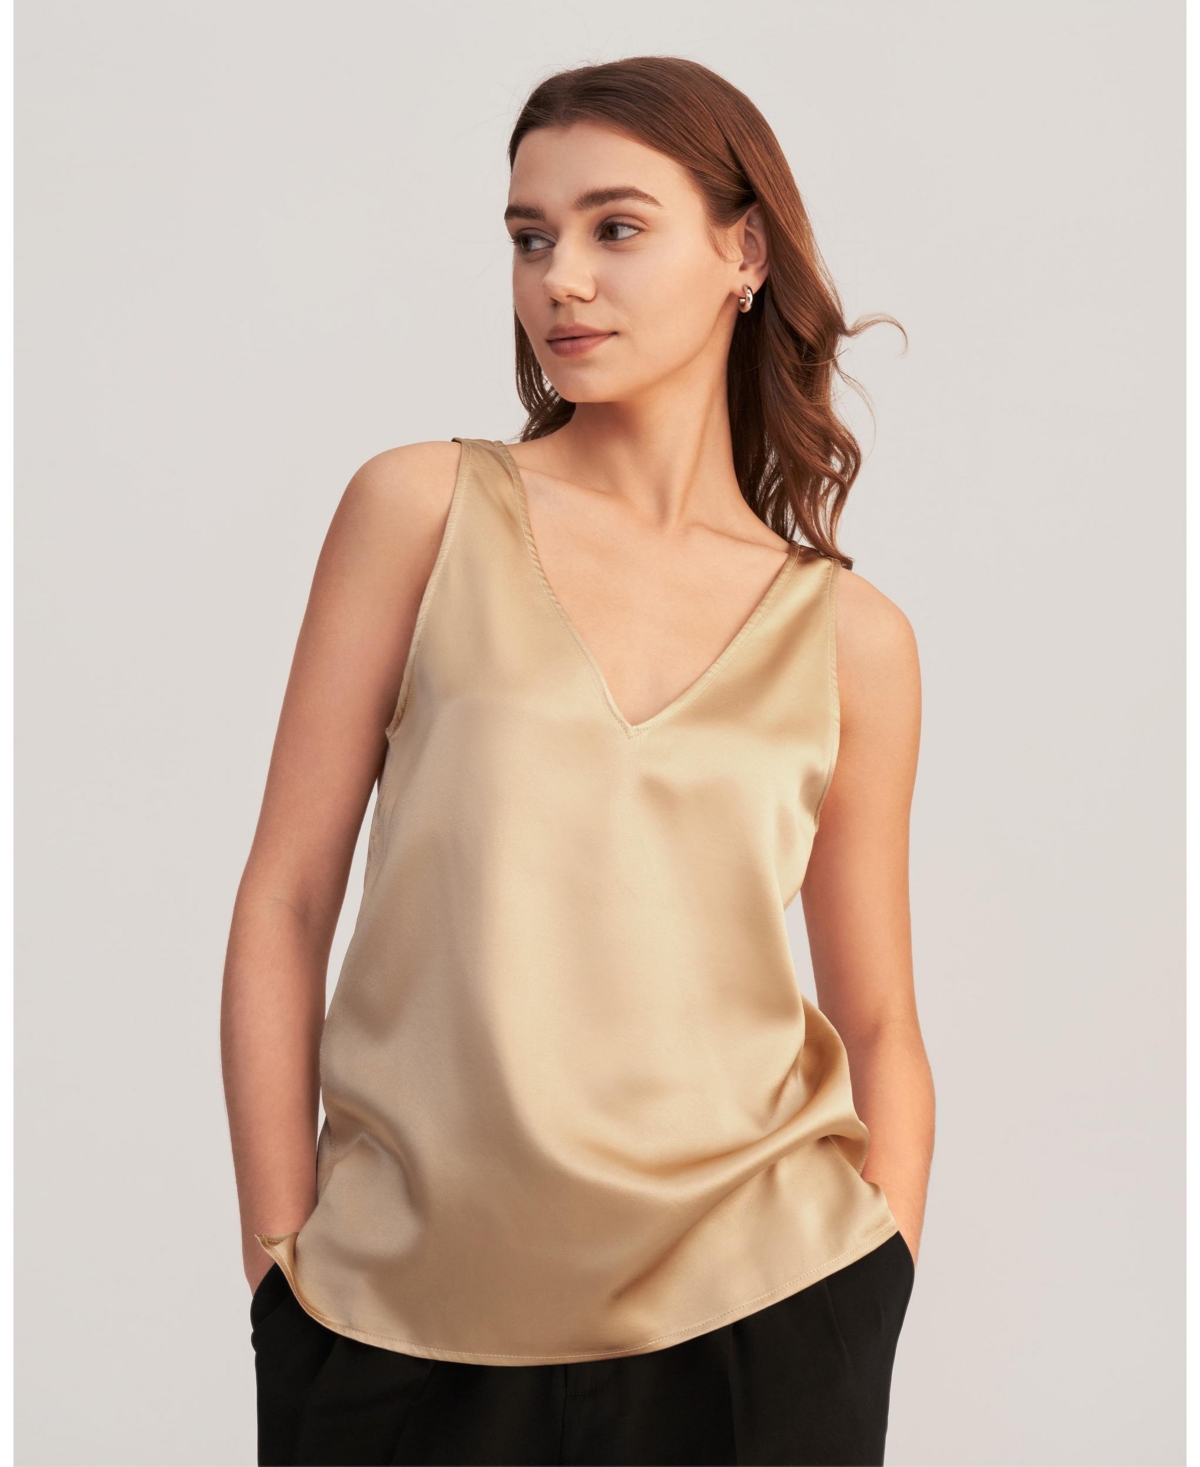 Women's V-Neck Sleeveless Silk Tank Top - Light Camel